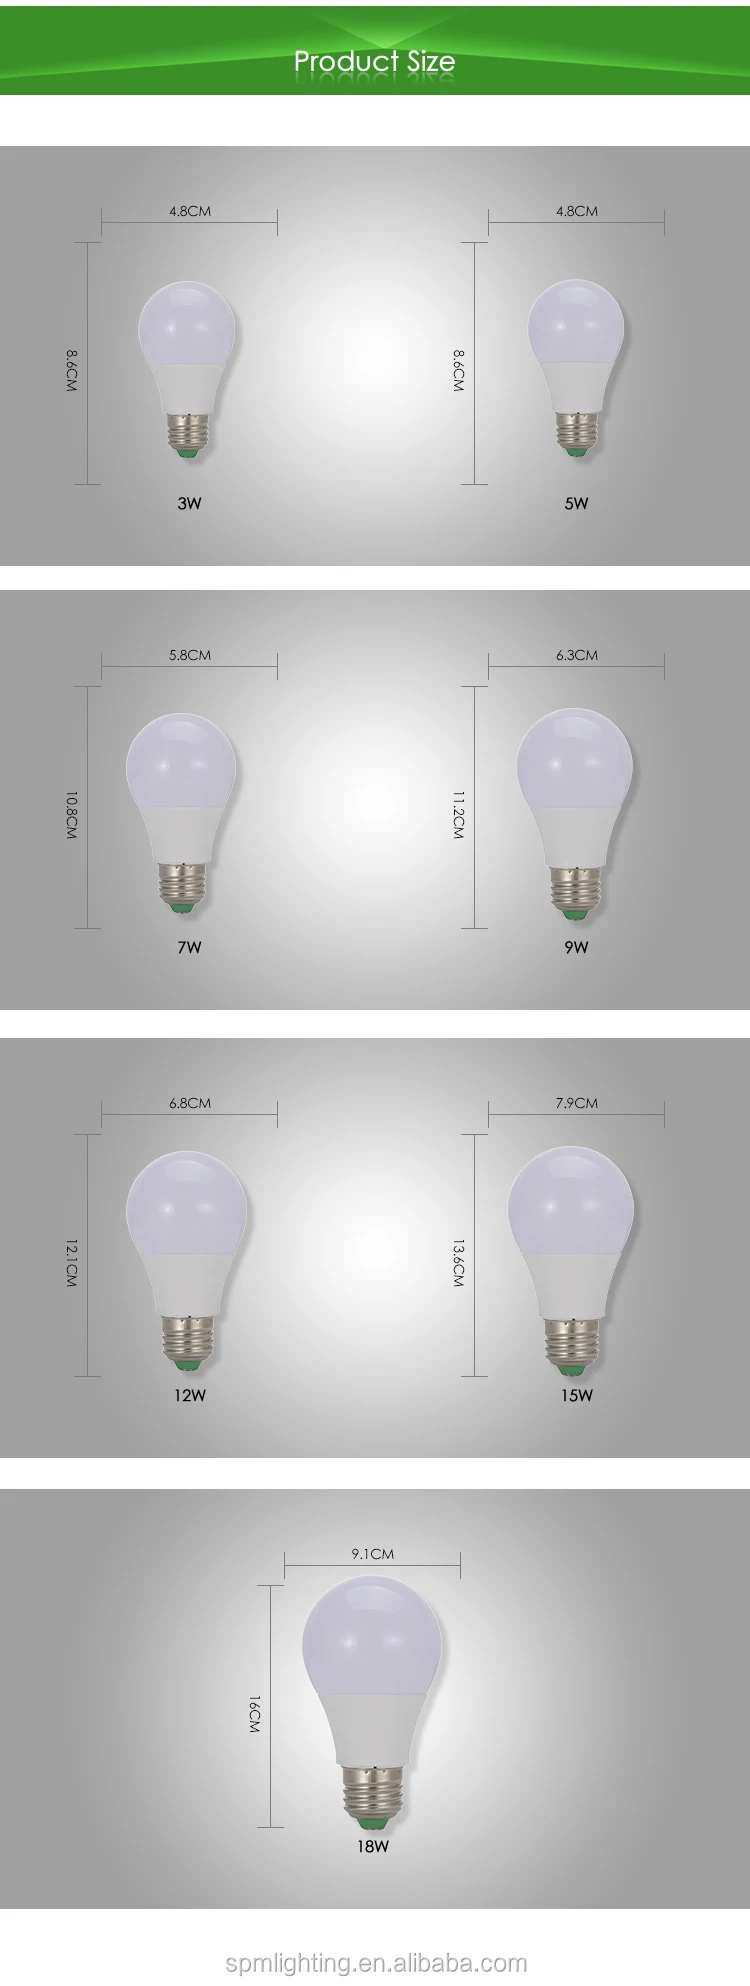 Hot sale led bulb skd parts bulb parts led light skd e27 led light